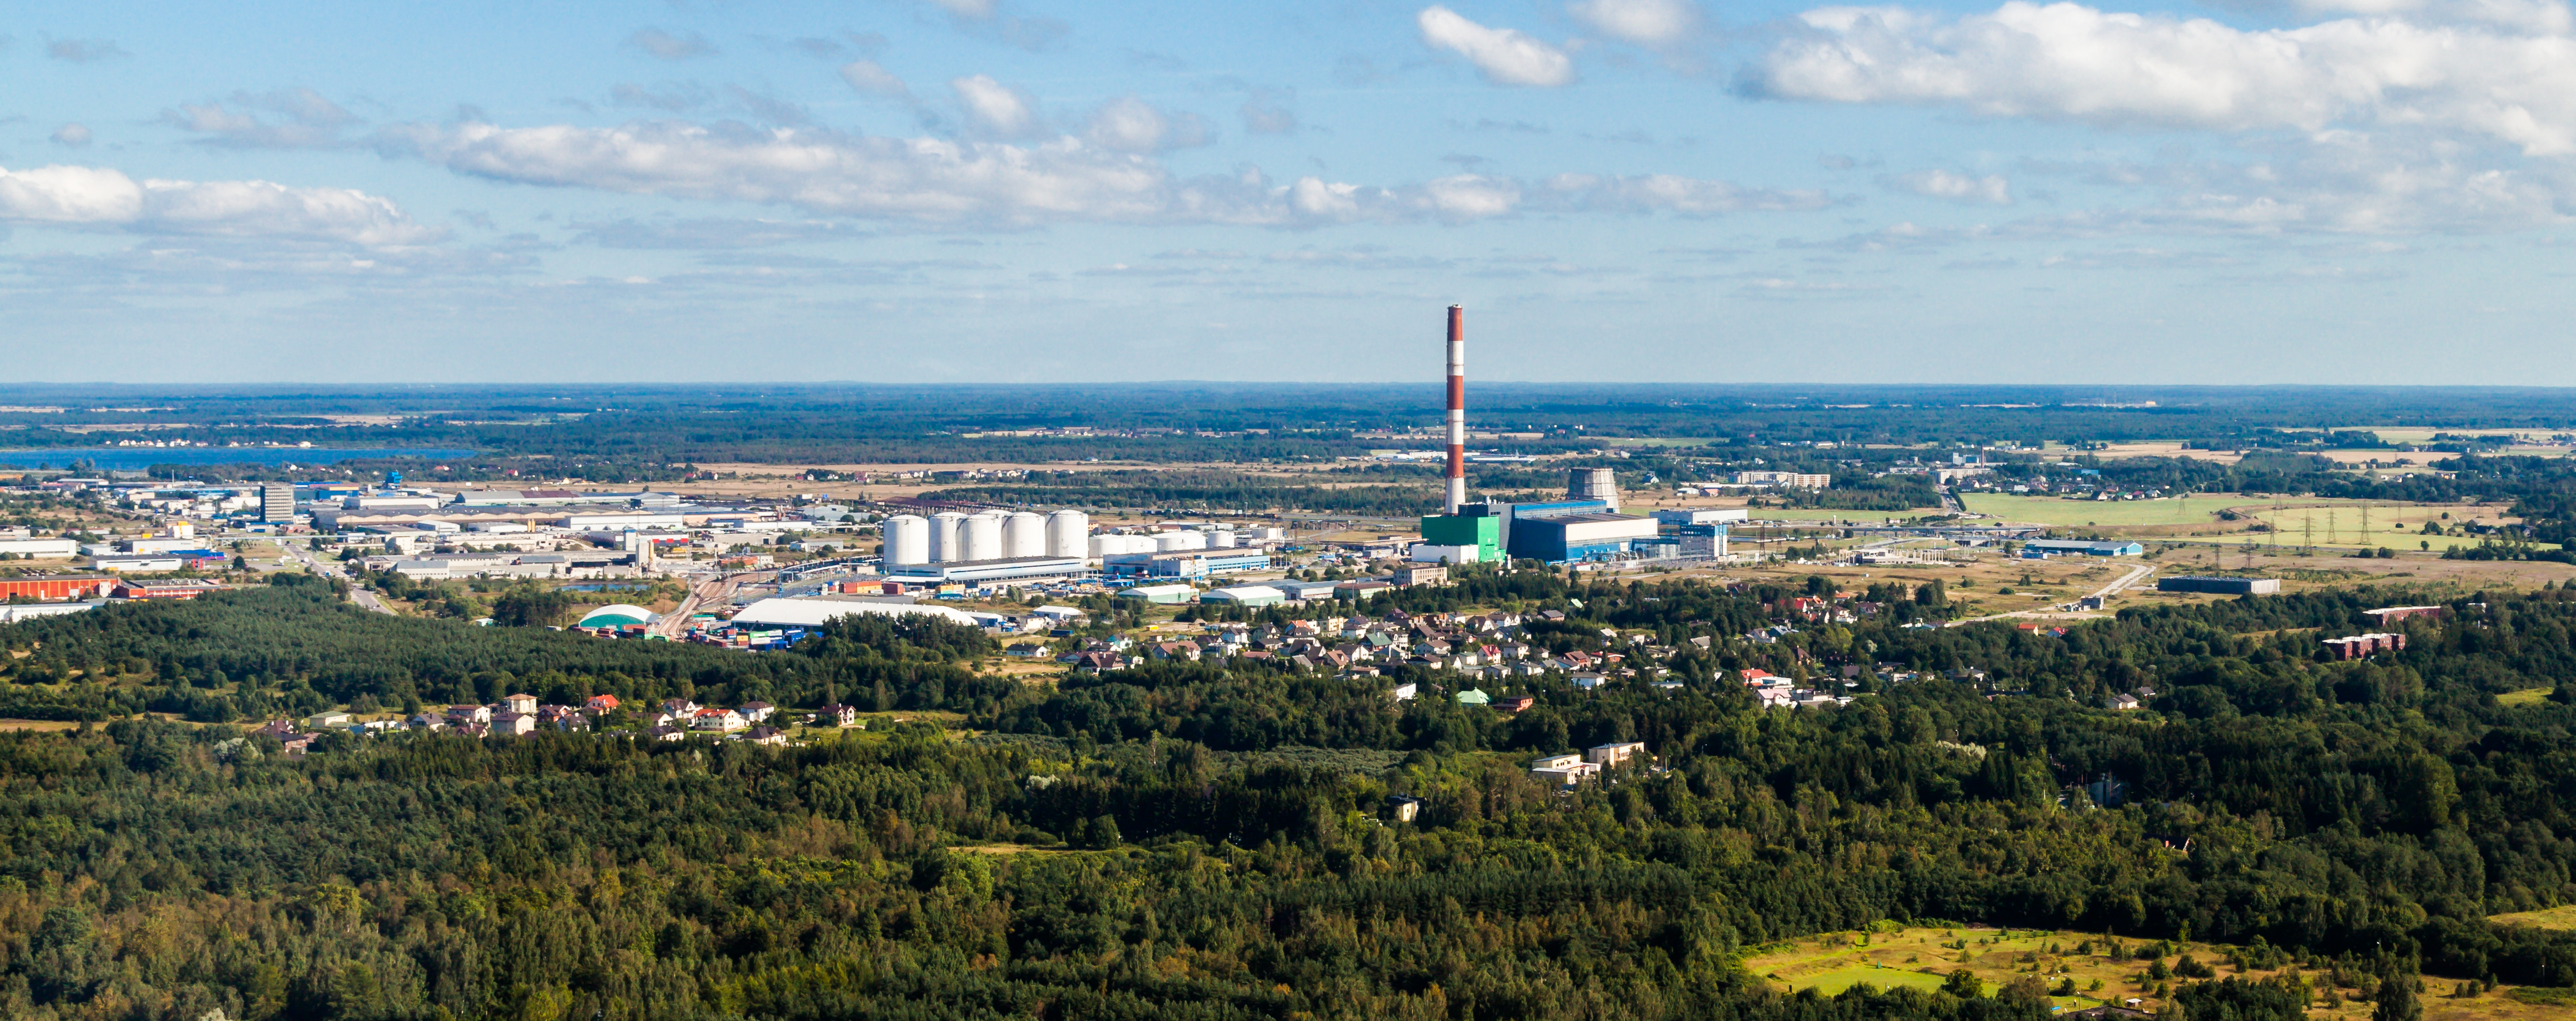 Planta energética de Iru, Estonia, 2012-08-12, DD 01